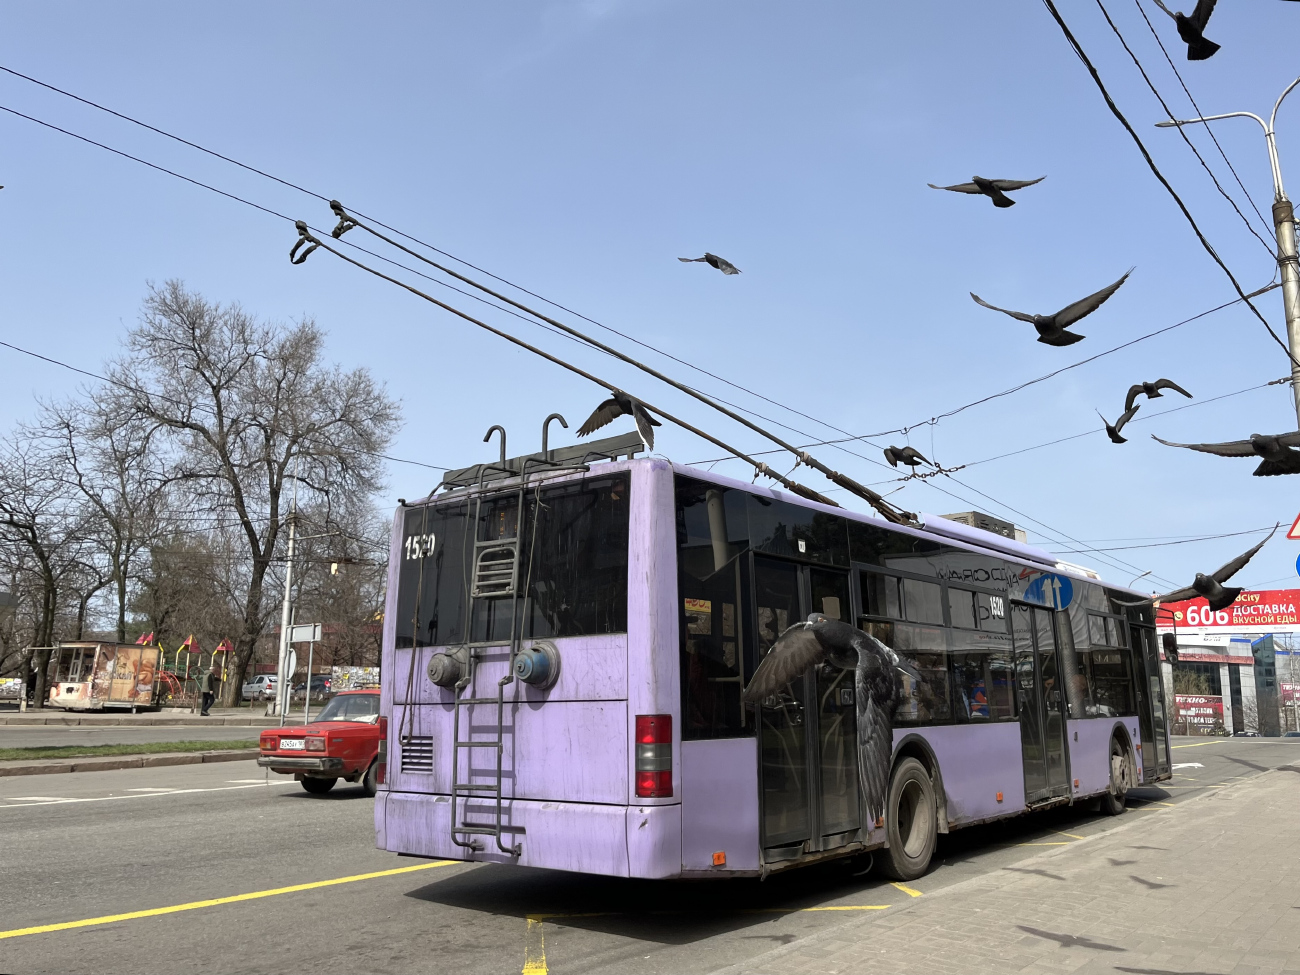 Donetsk, LAZ E183A1 # 1520; Transport and animals